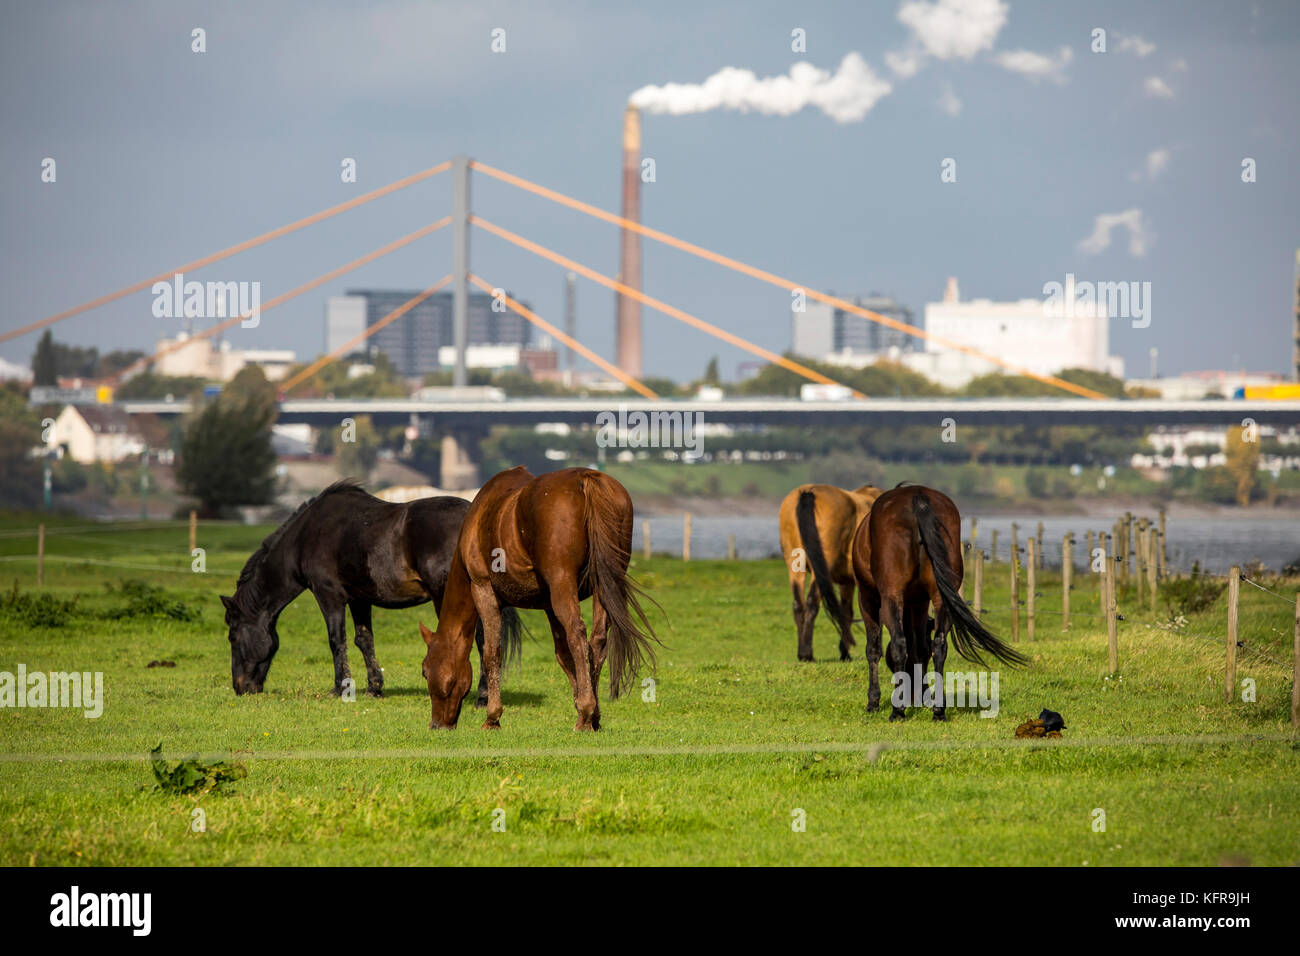 Rhine meadows,in Duisburg Hochemmerich, Germany, Horses, bridge over river Rhine, industry, Stock Photo